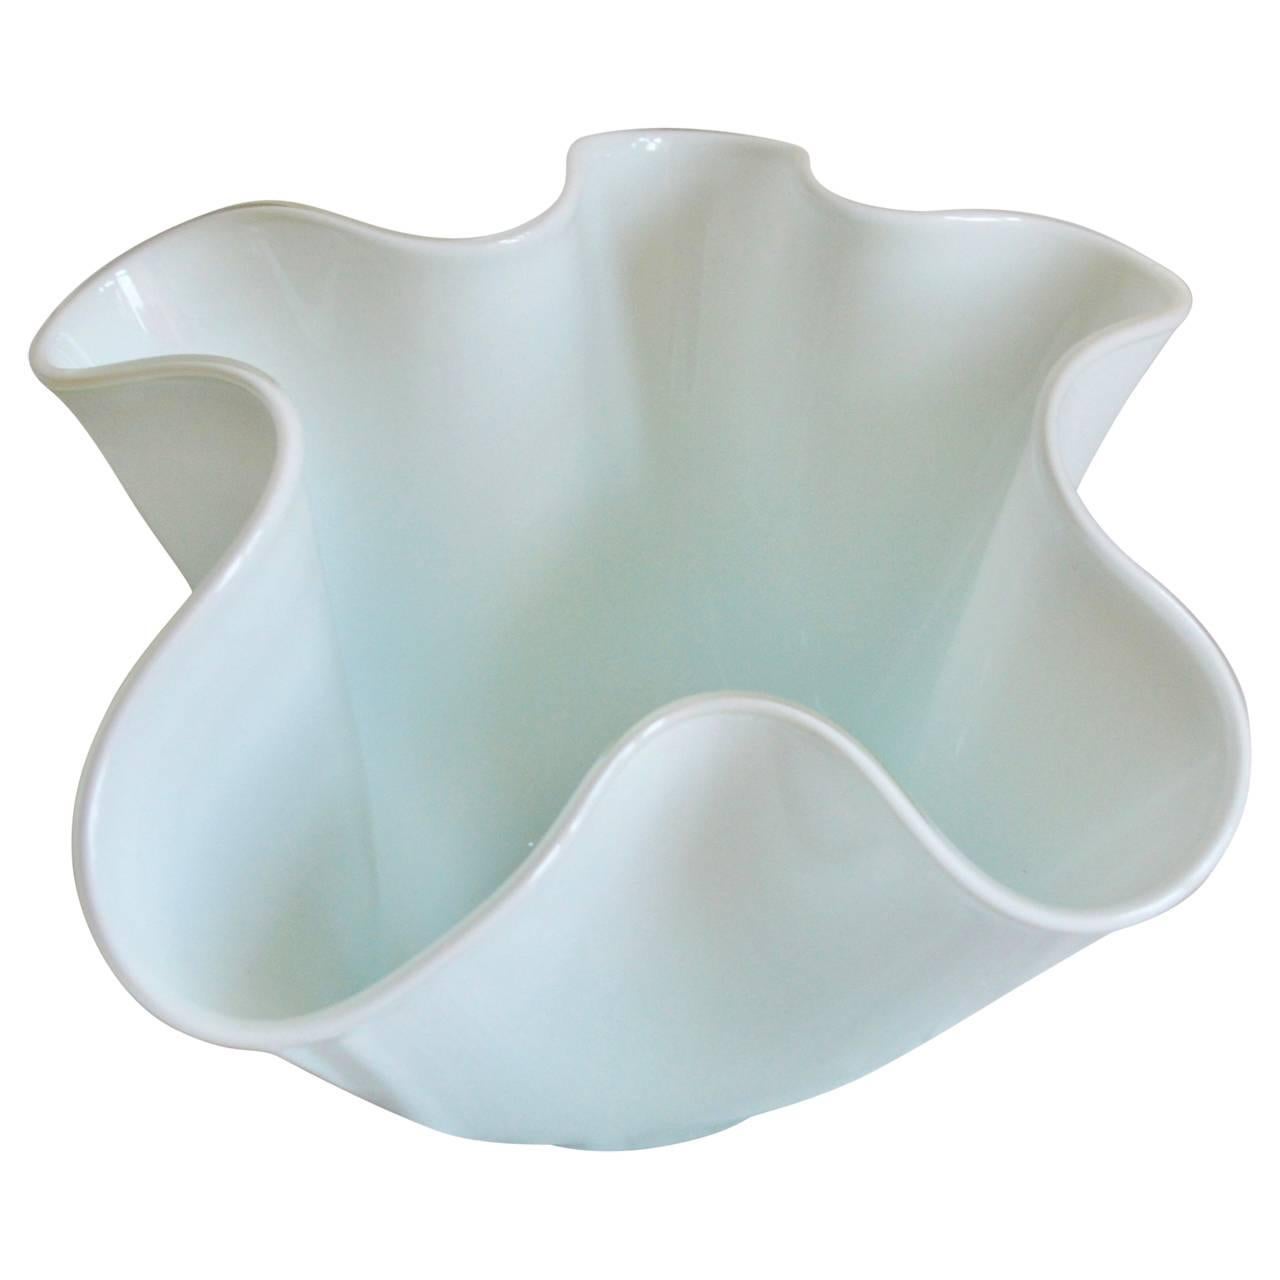 Venini White Opaline Vase with a Aqua Tint 1